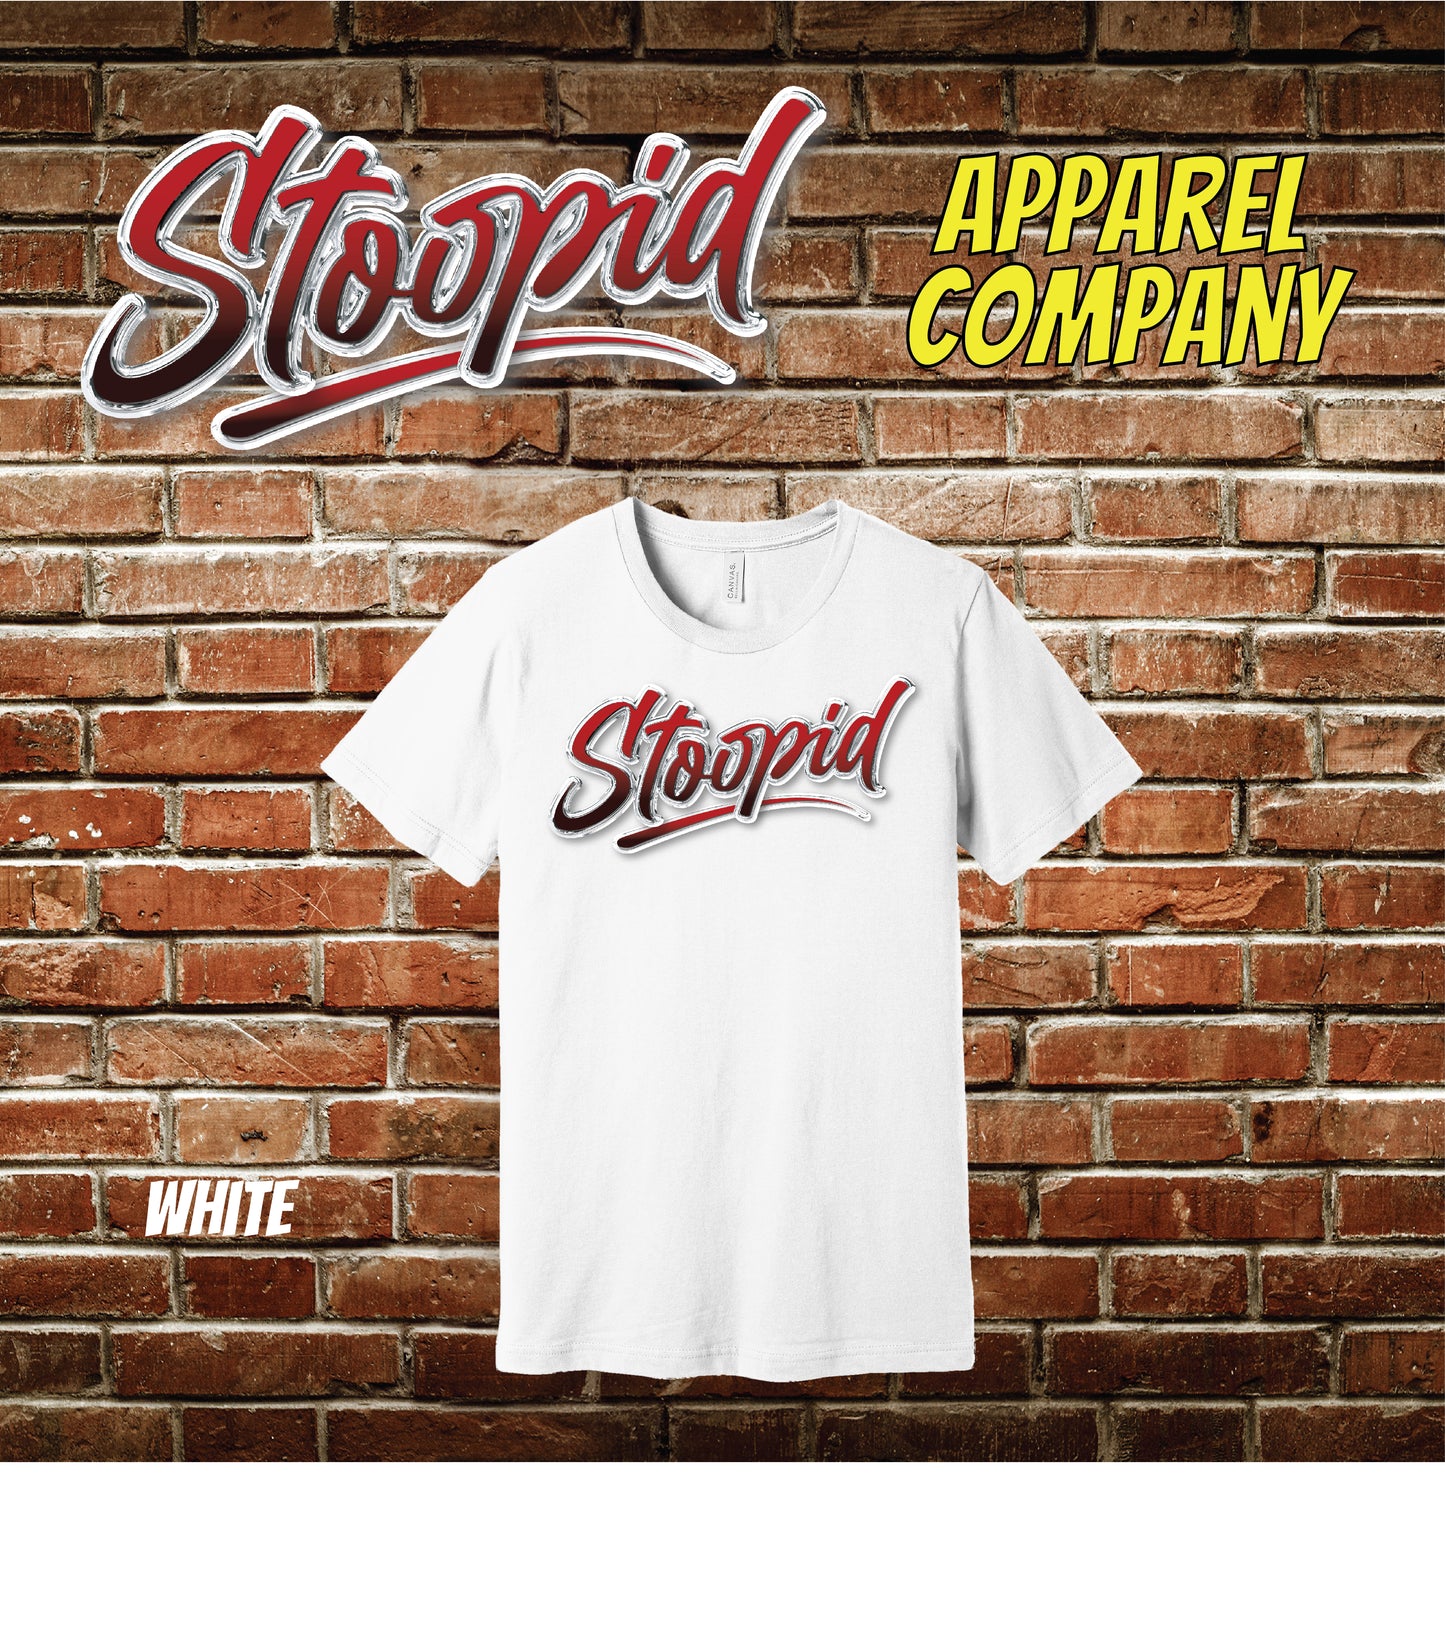 "The Original" Stoopid T-Shirt